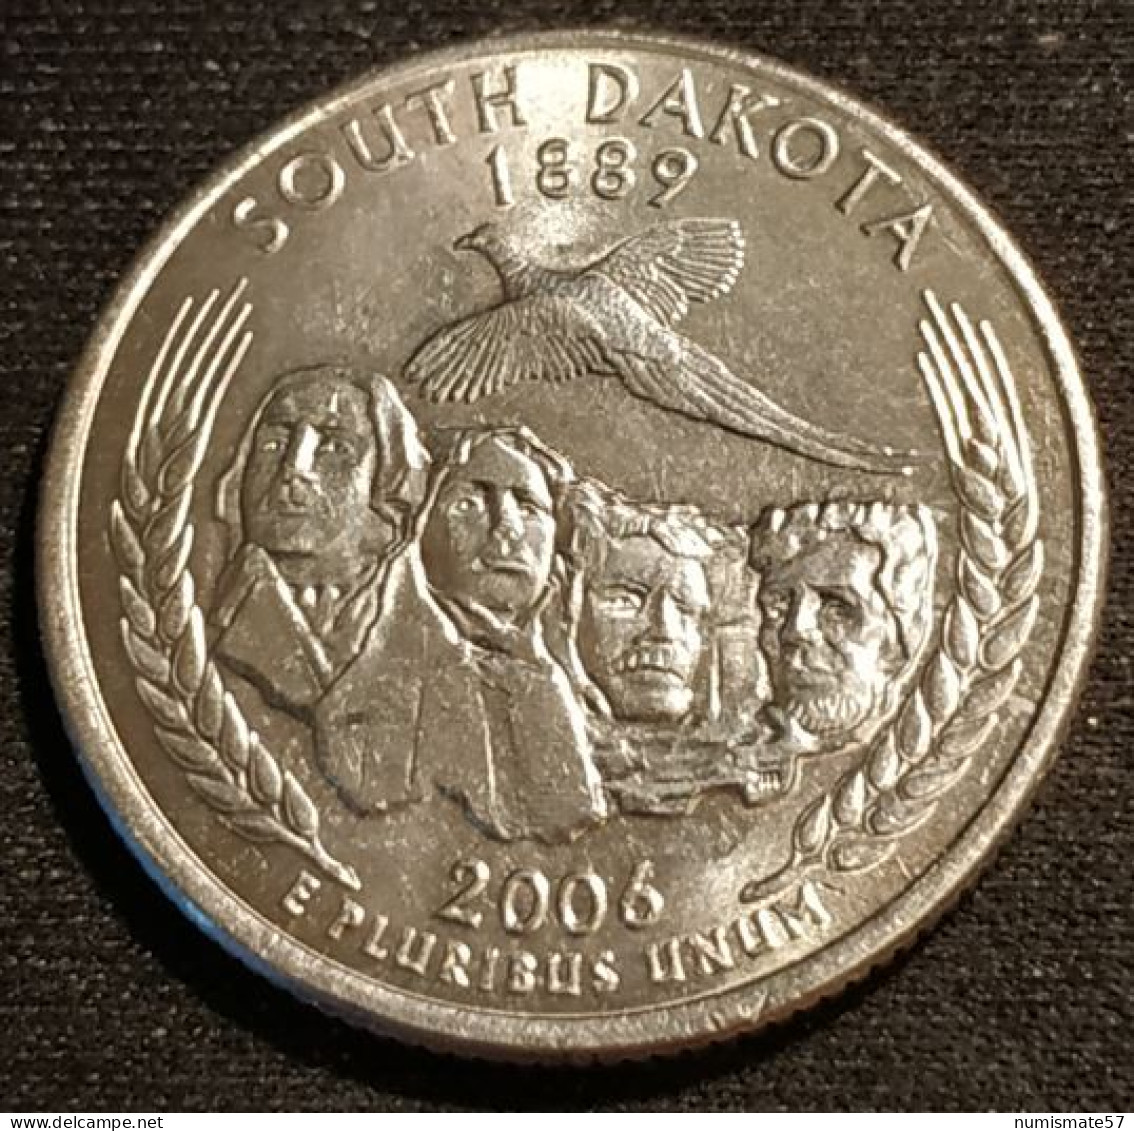 ETATS UNIS - USA - ¼ - 1/4 DOLLAR 2006 P - Sud Dakota - KM 386 - Quarter Dollar - South Dakota - 1999-2009: State Quarters